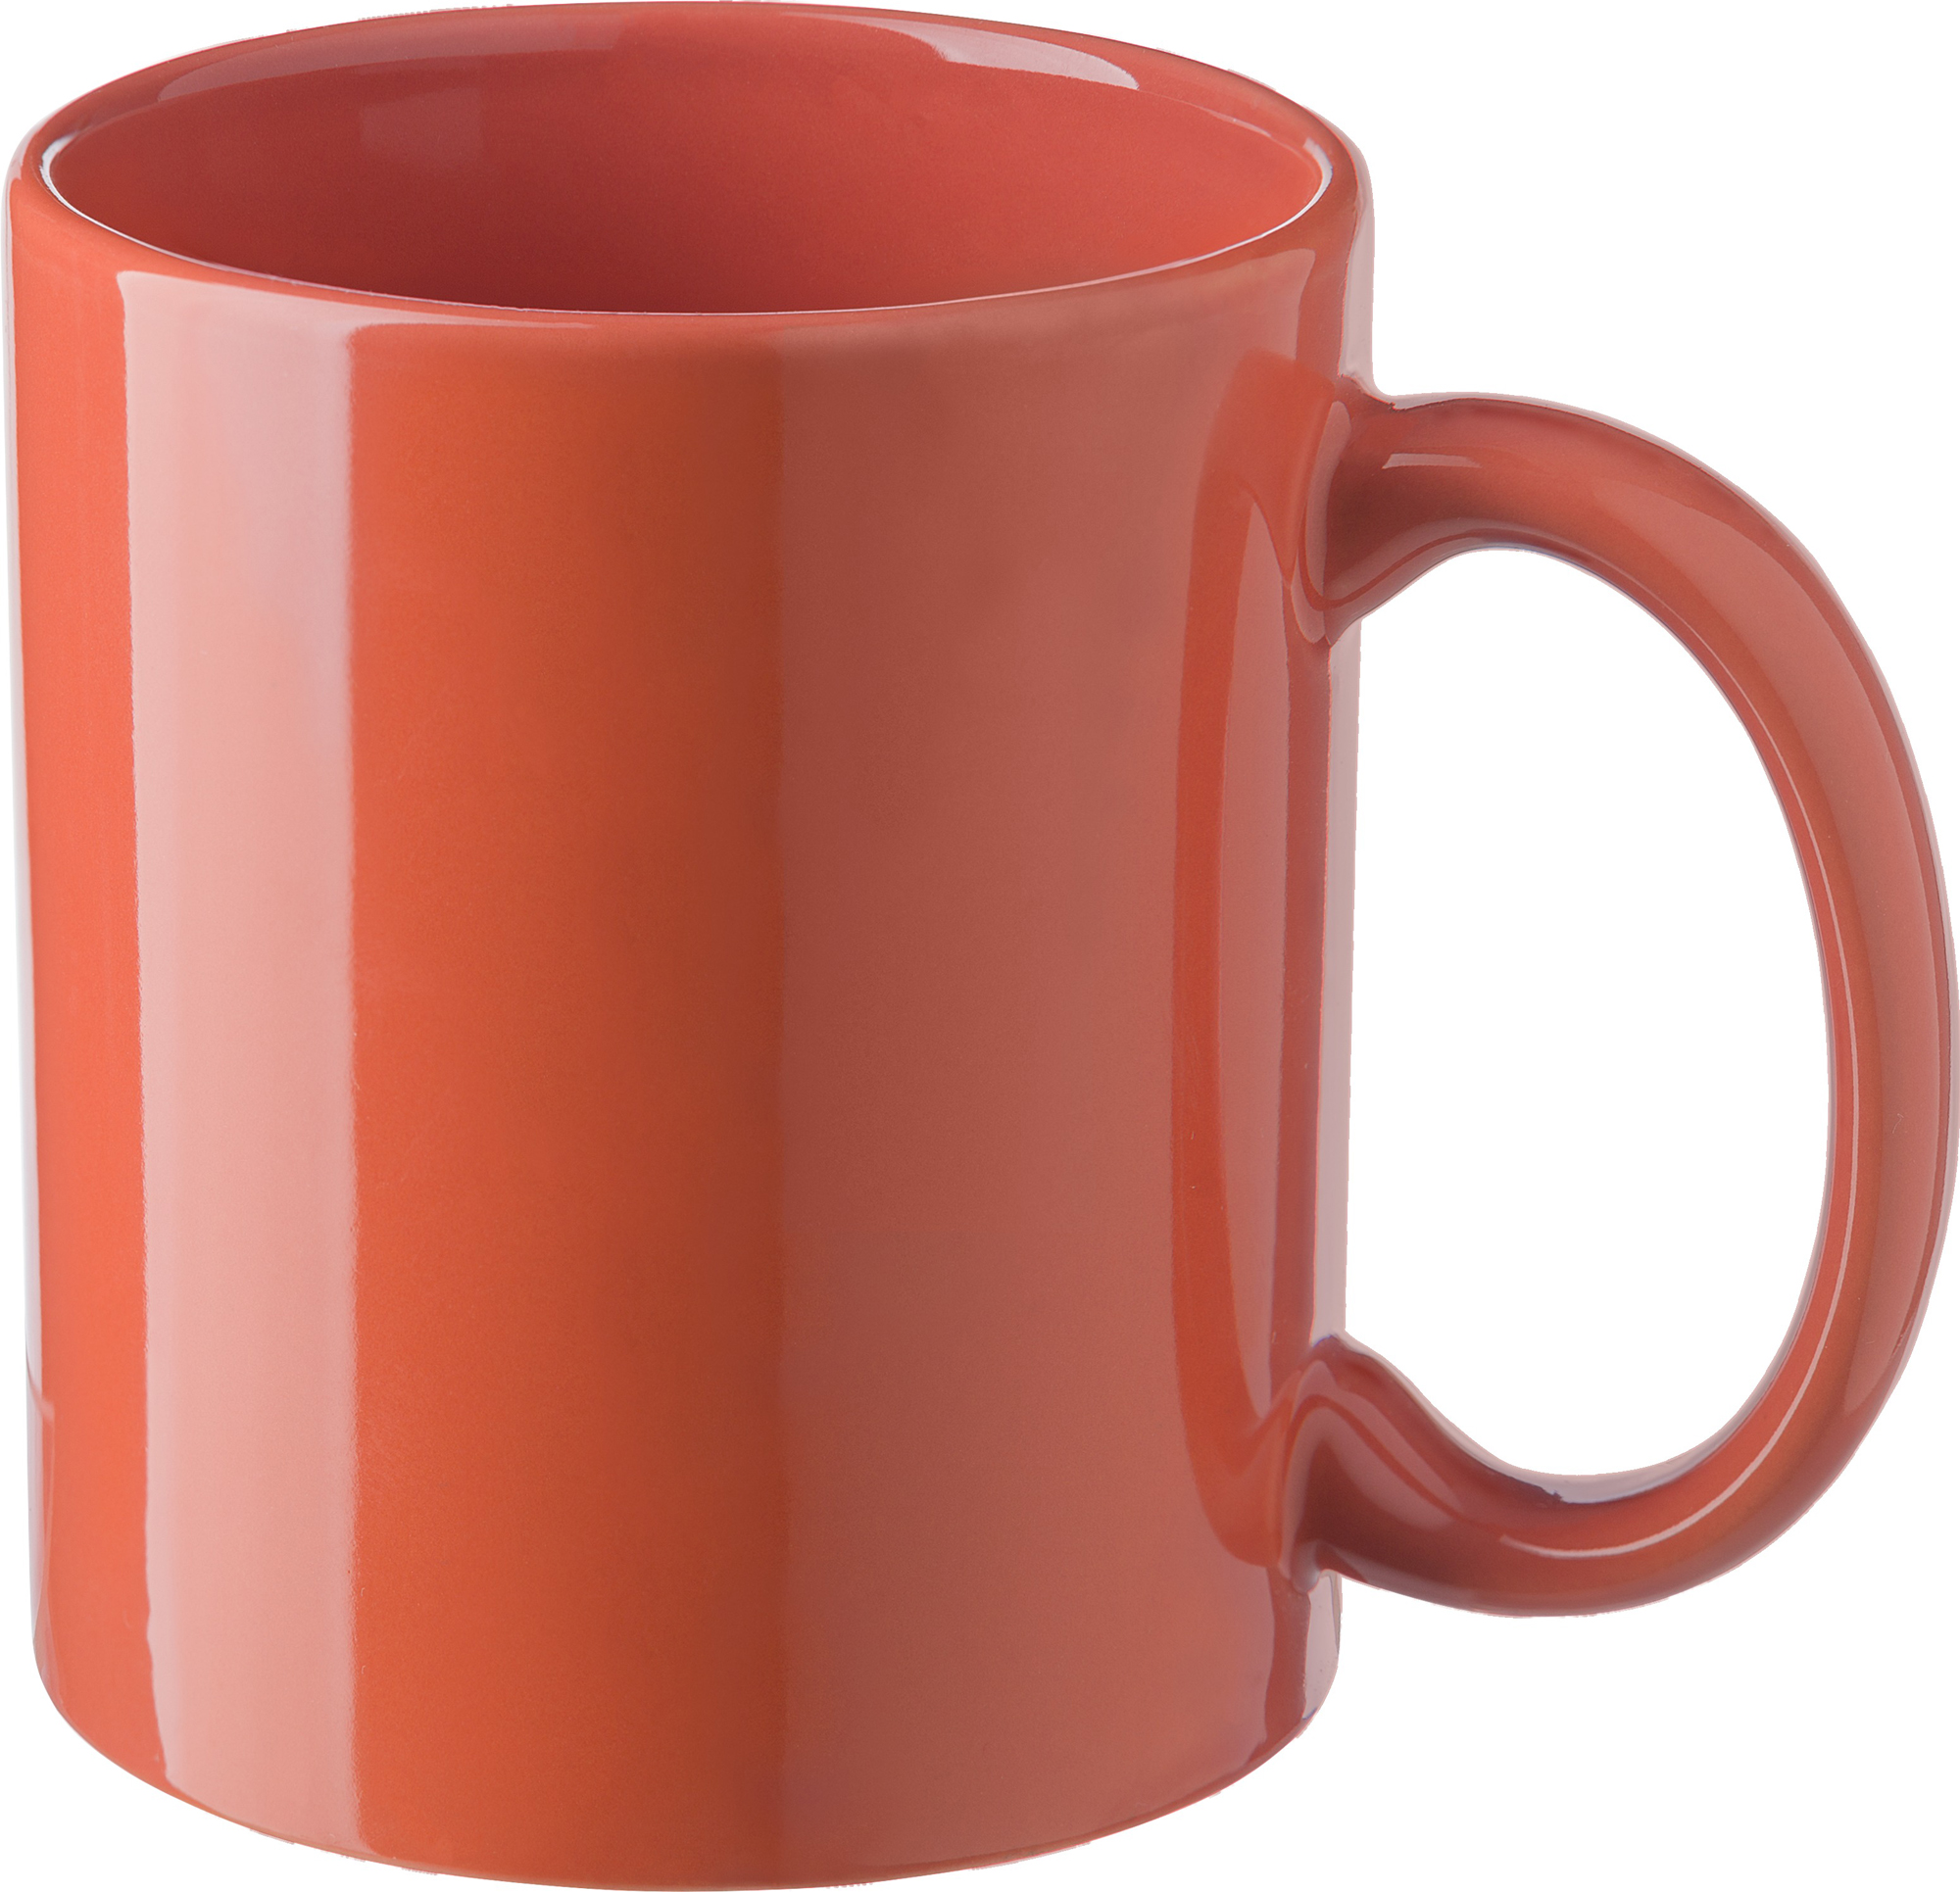 000000864650 007999999 3d045 rgt pro01 2022 fal - Coloured ceramic mug (300ml)